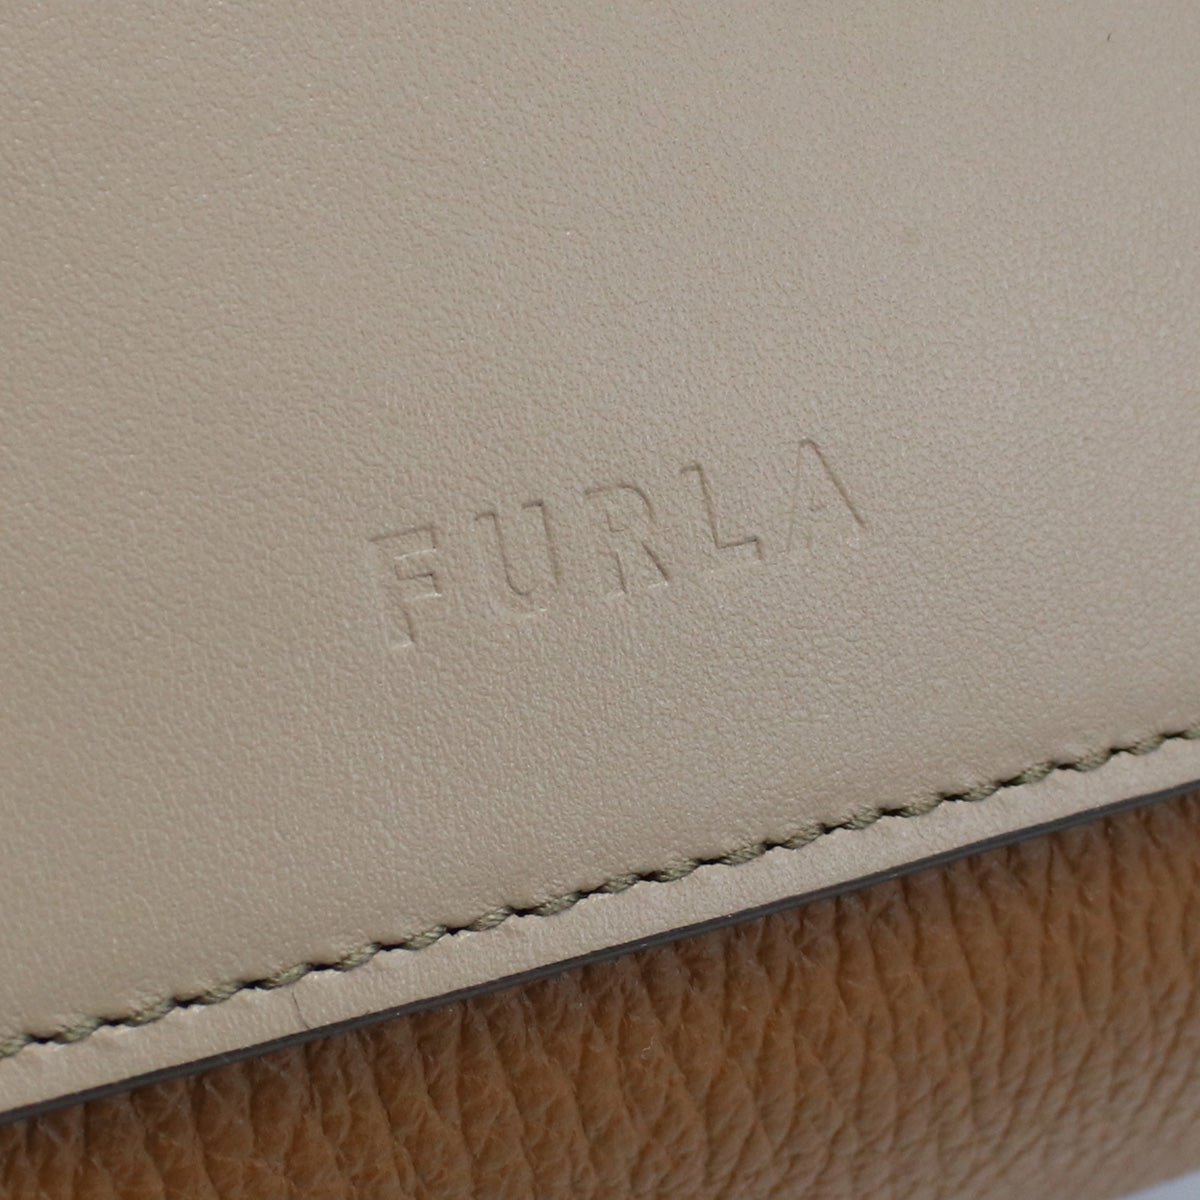 Furla フルラ FURLA GILDA WB00583 ハンドバッグ GREIGE+COGNAC+NERO ブラウン系 レディース